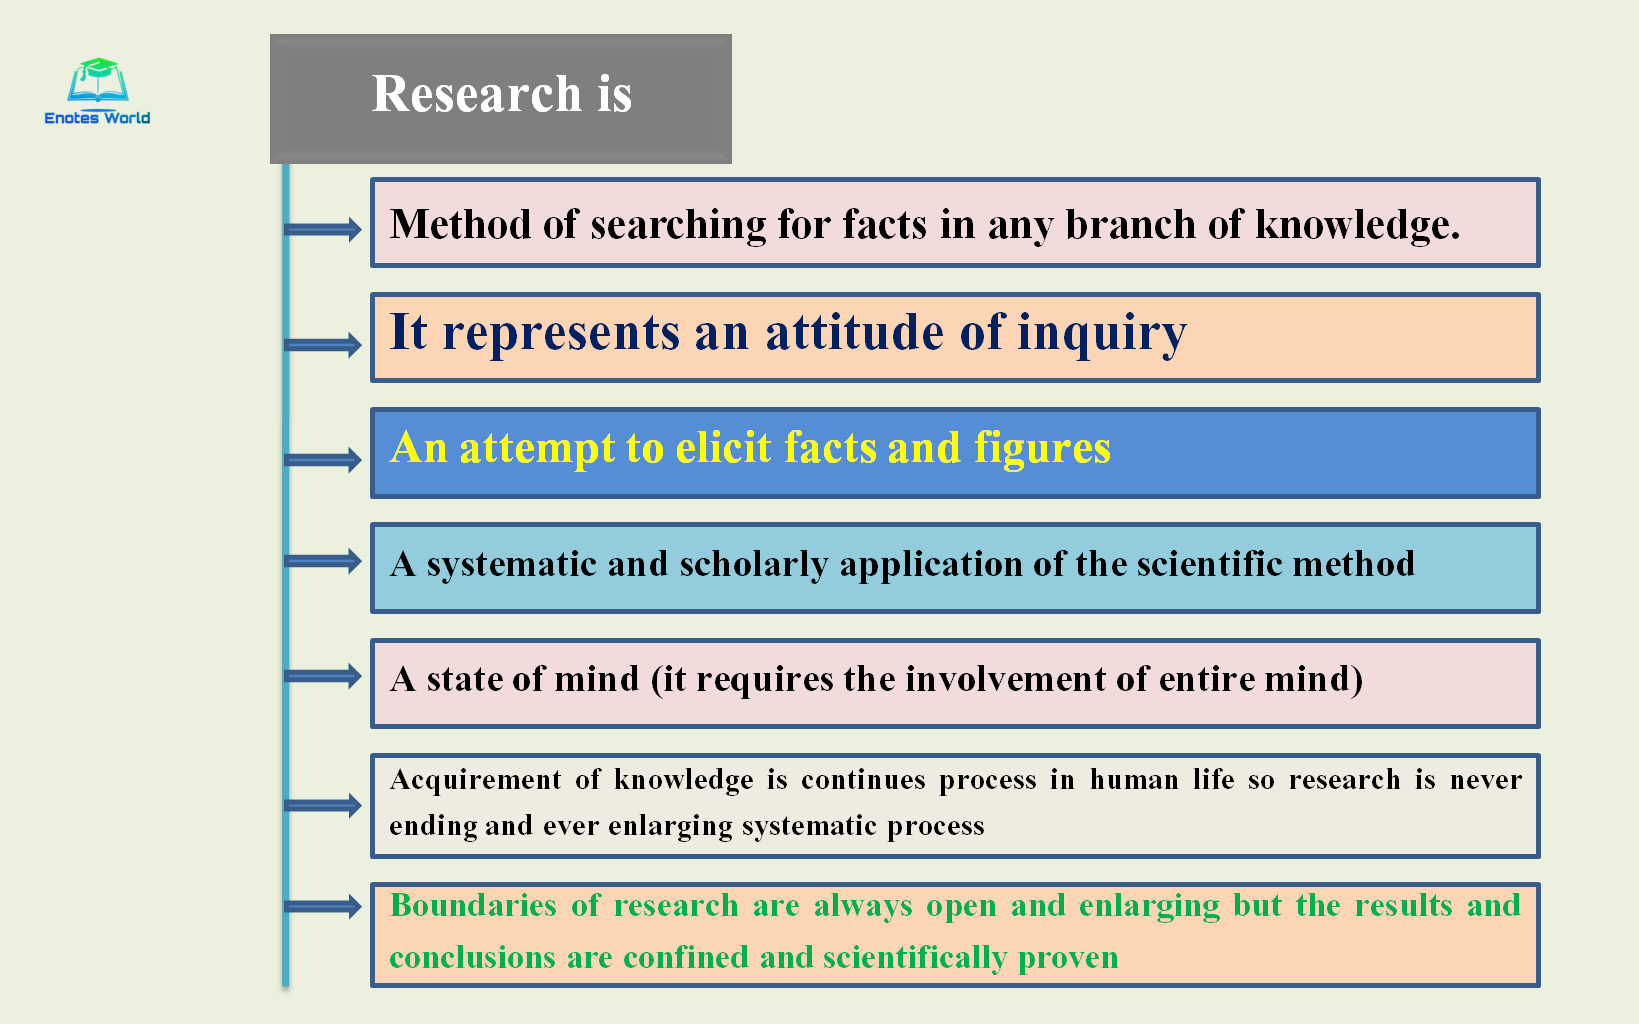 characteristics of research essay